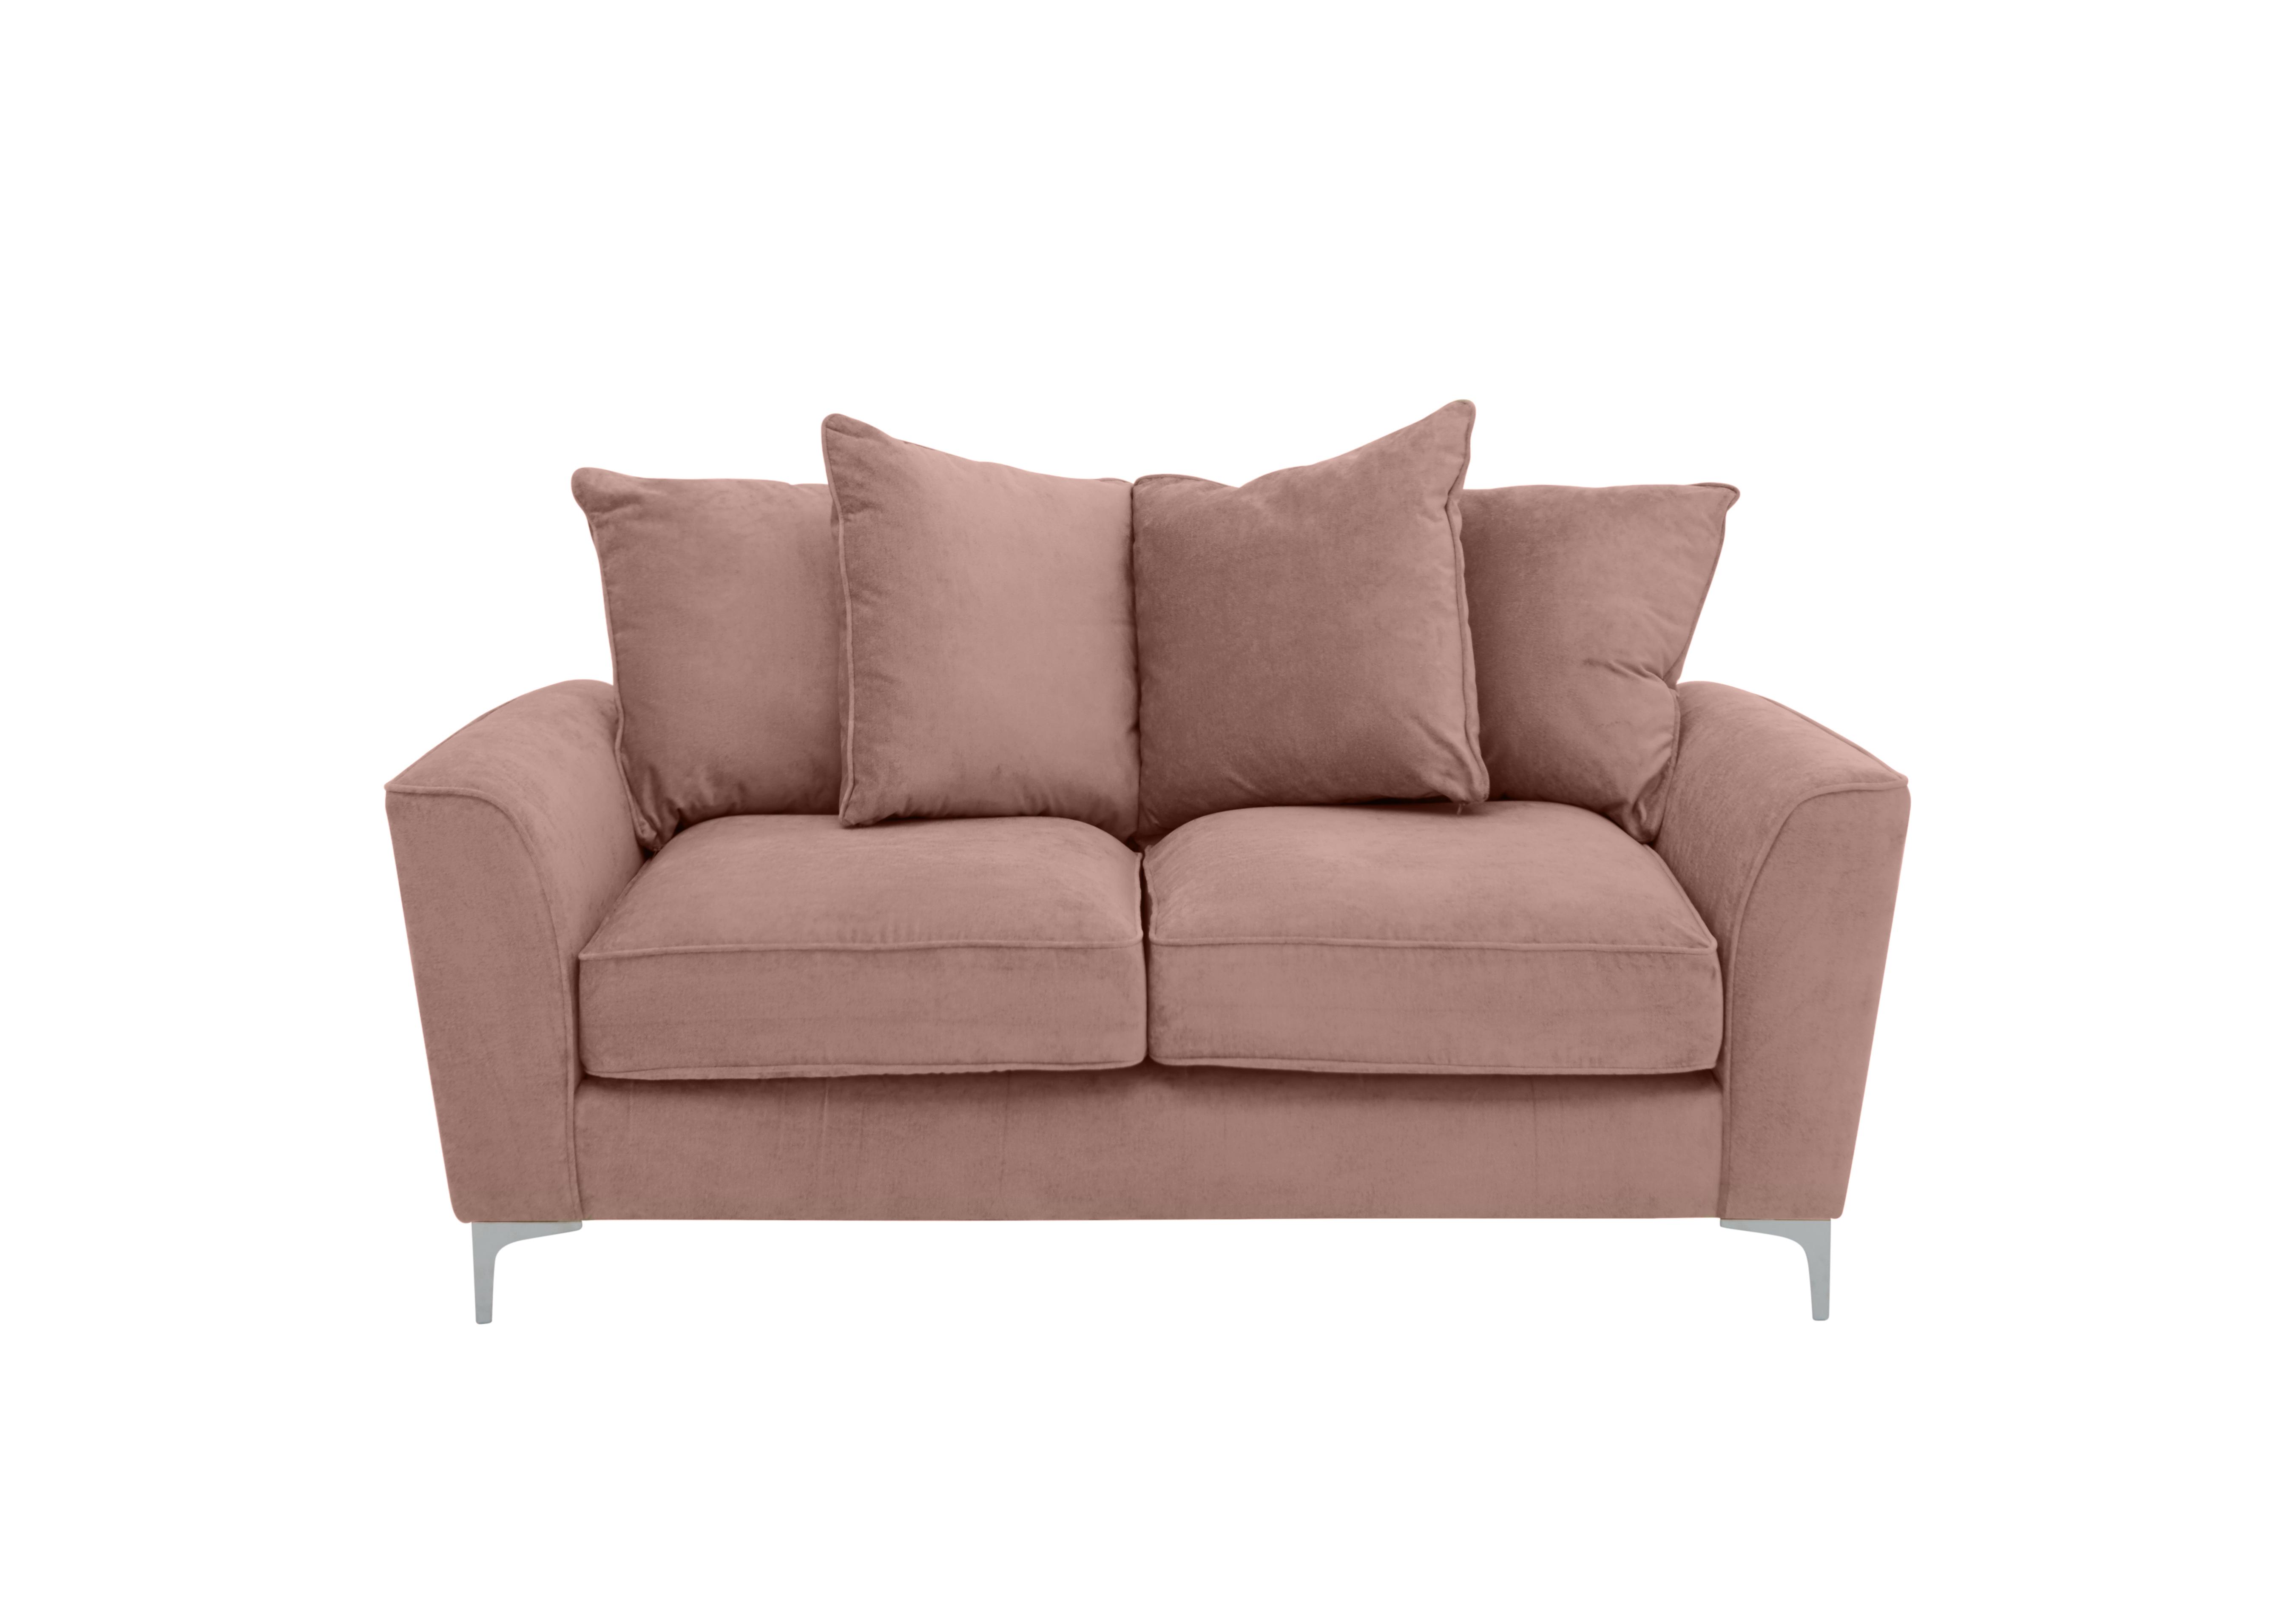 Legend 2 Seater Pillow Back Fabric Sofa in Kingston Blush on Furniture Village